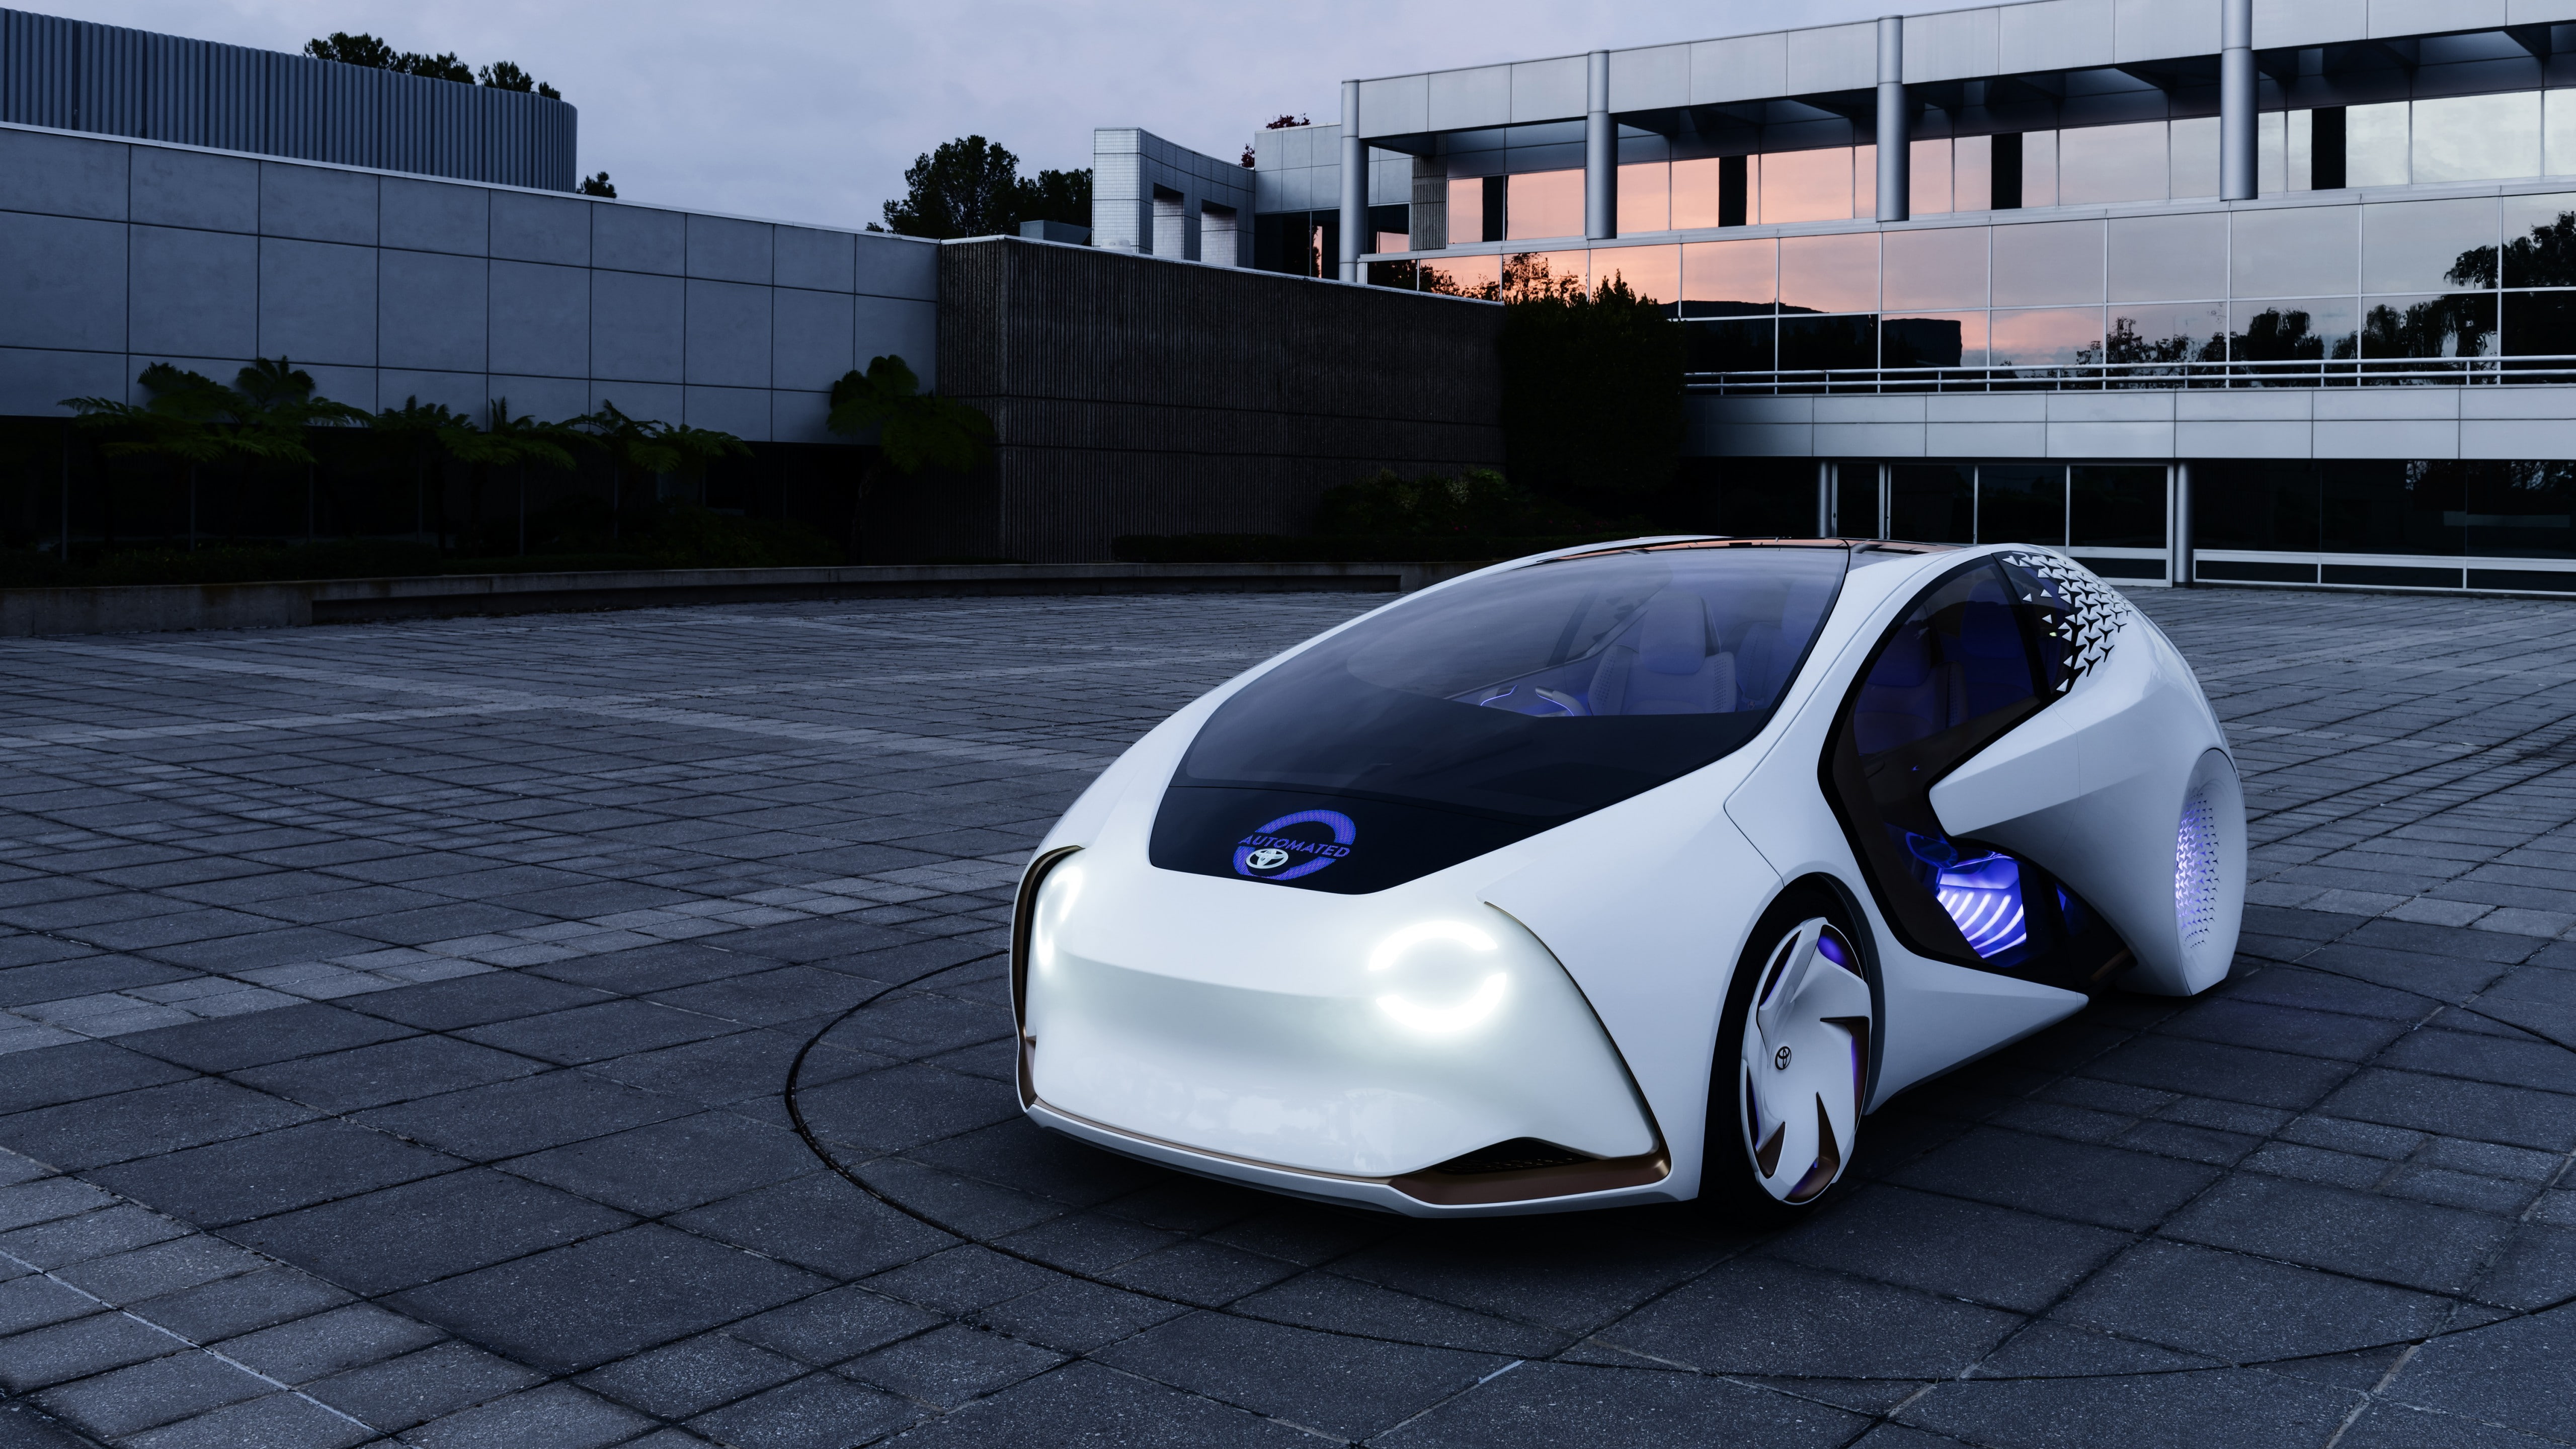 white and black concept smart car, Toyota Concept-i, electric car